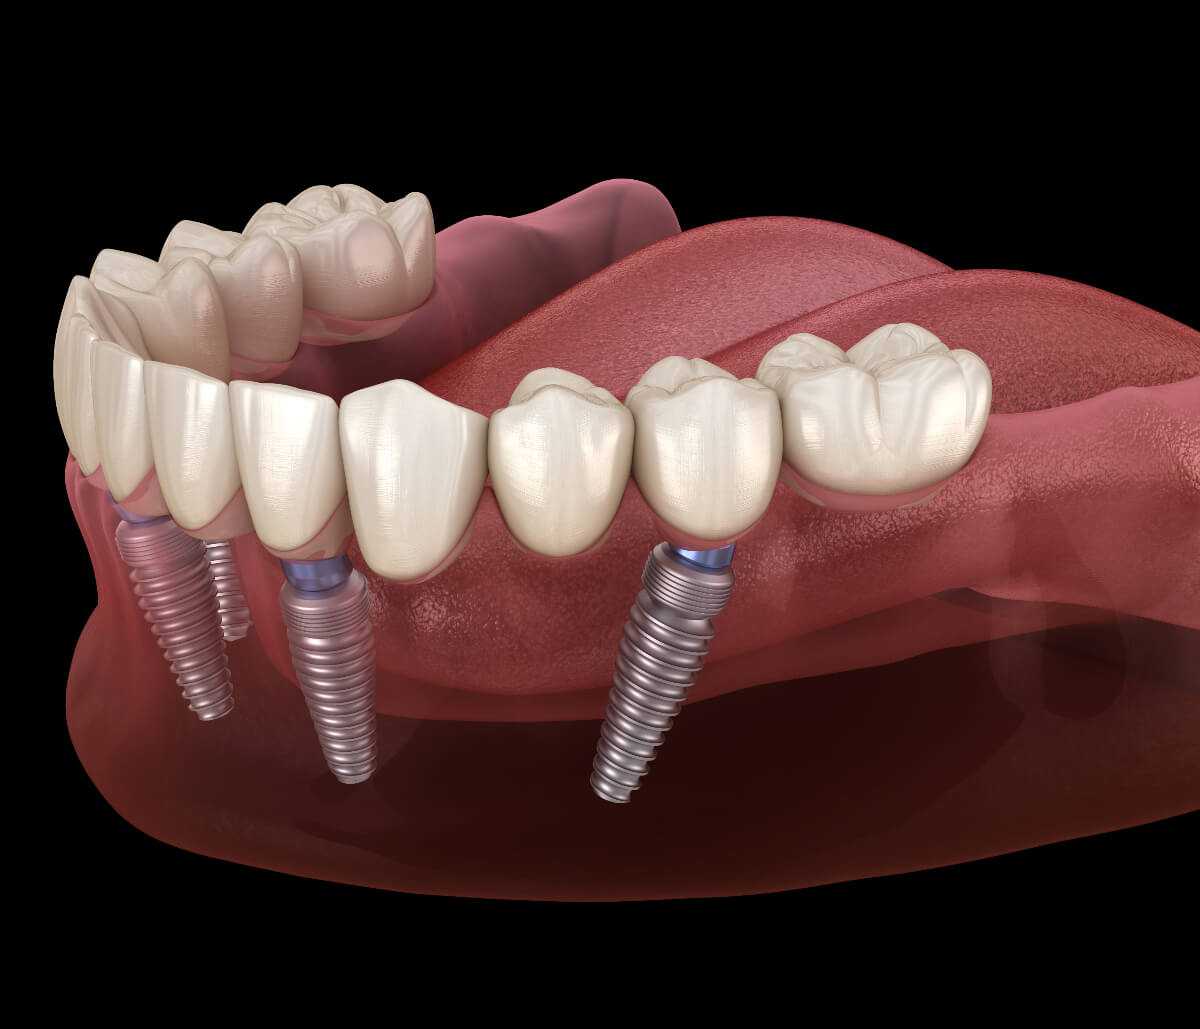 All-on-4 Dental Implants in Millbrae CA area